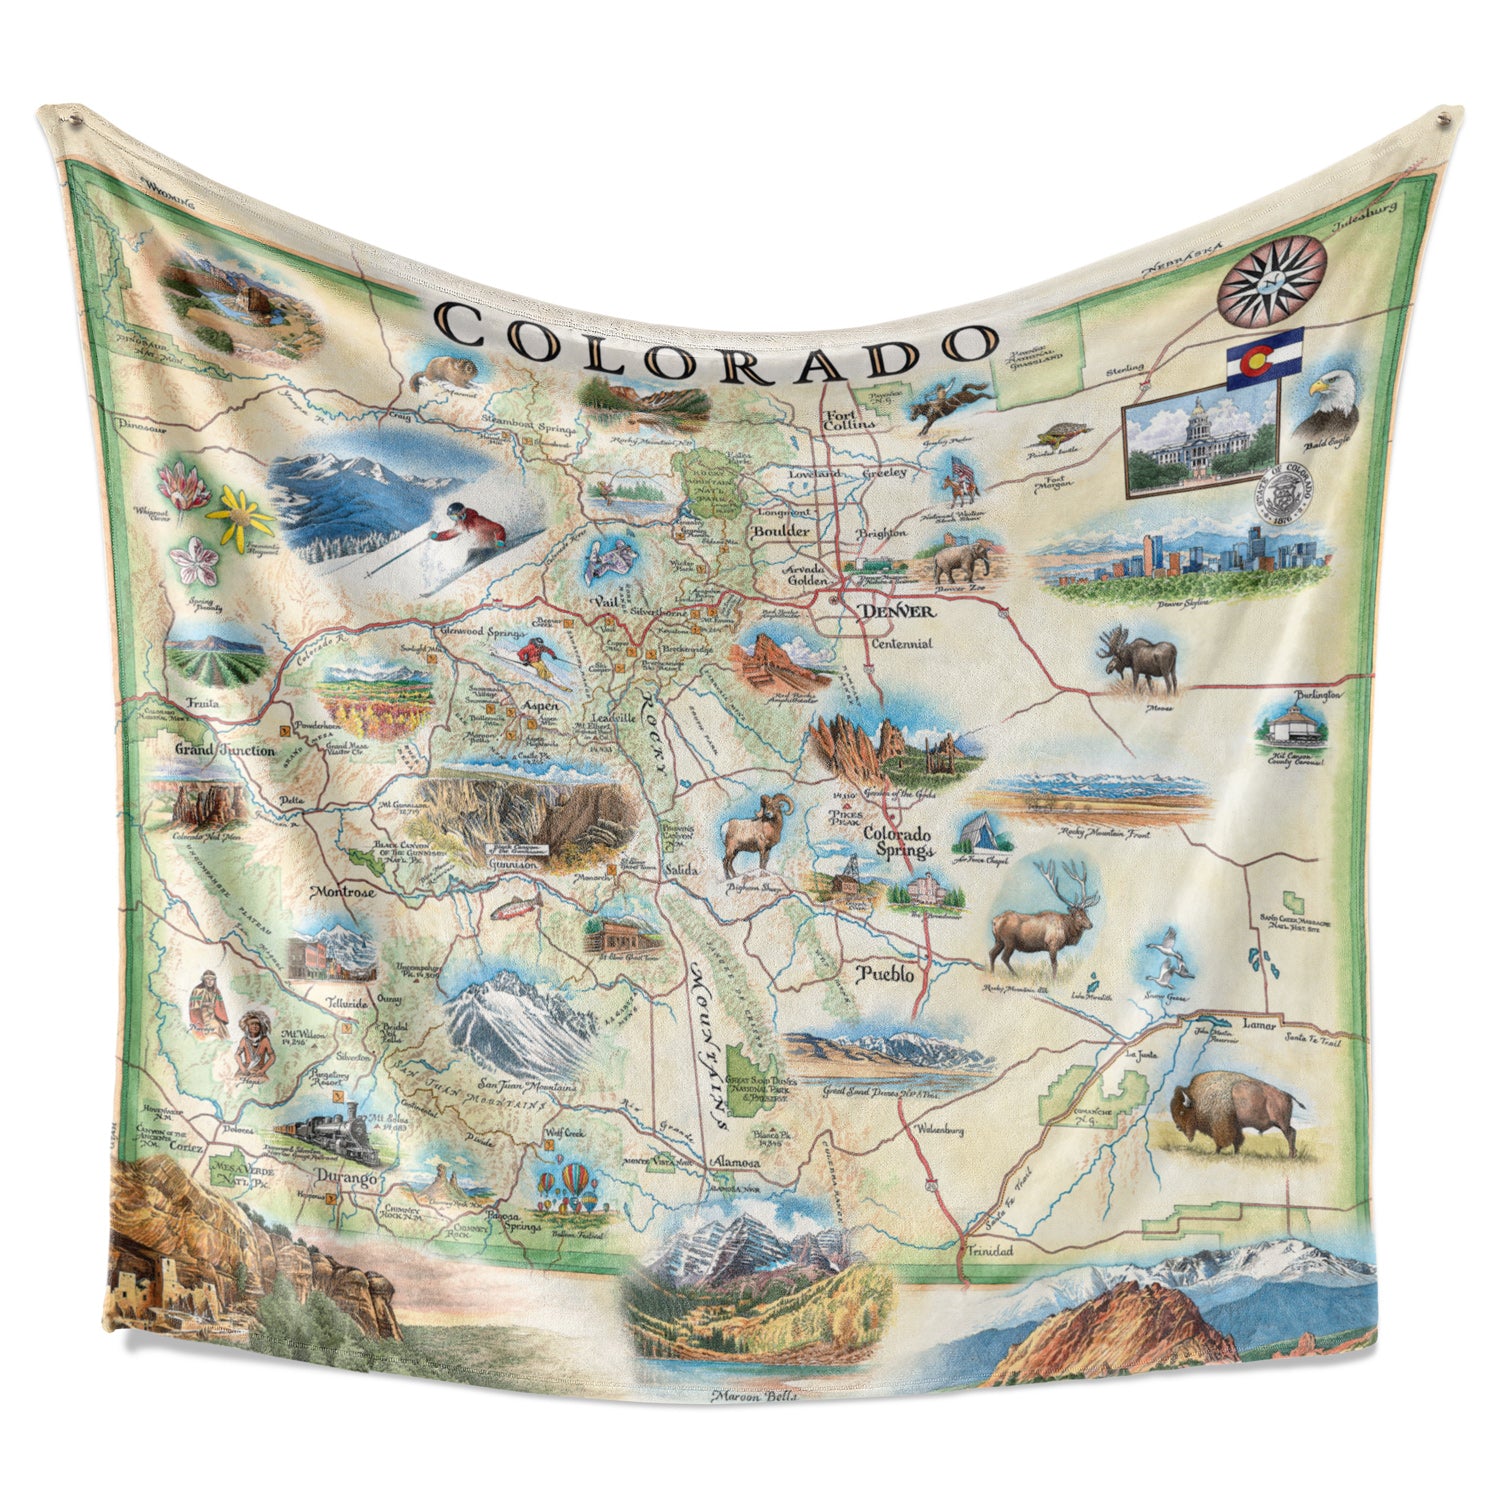 Hanging Colorado map. Stunning hand-drawn artwork of Colorado on blanket. Measures 58